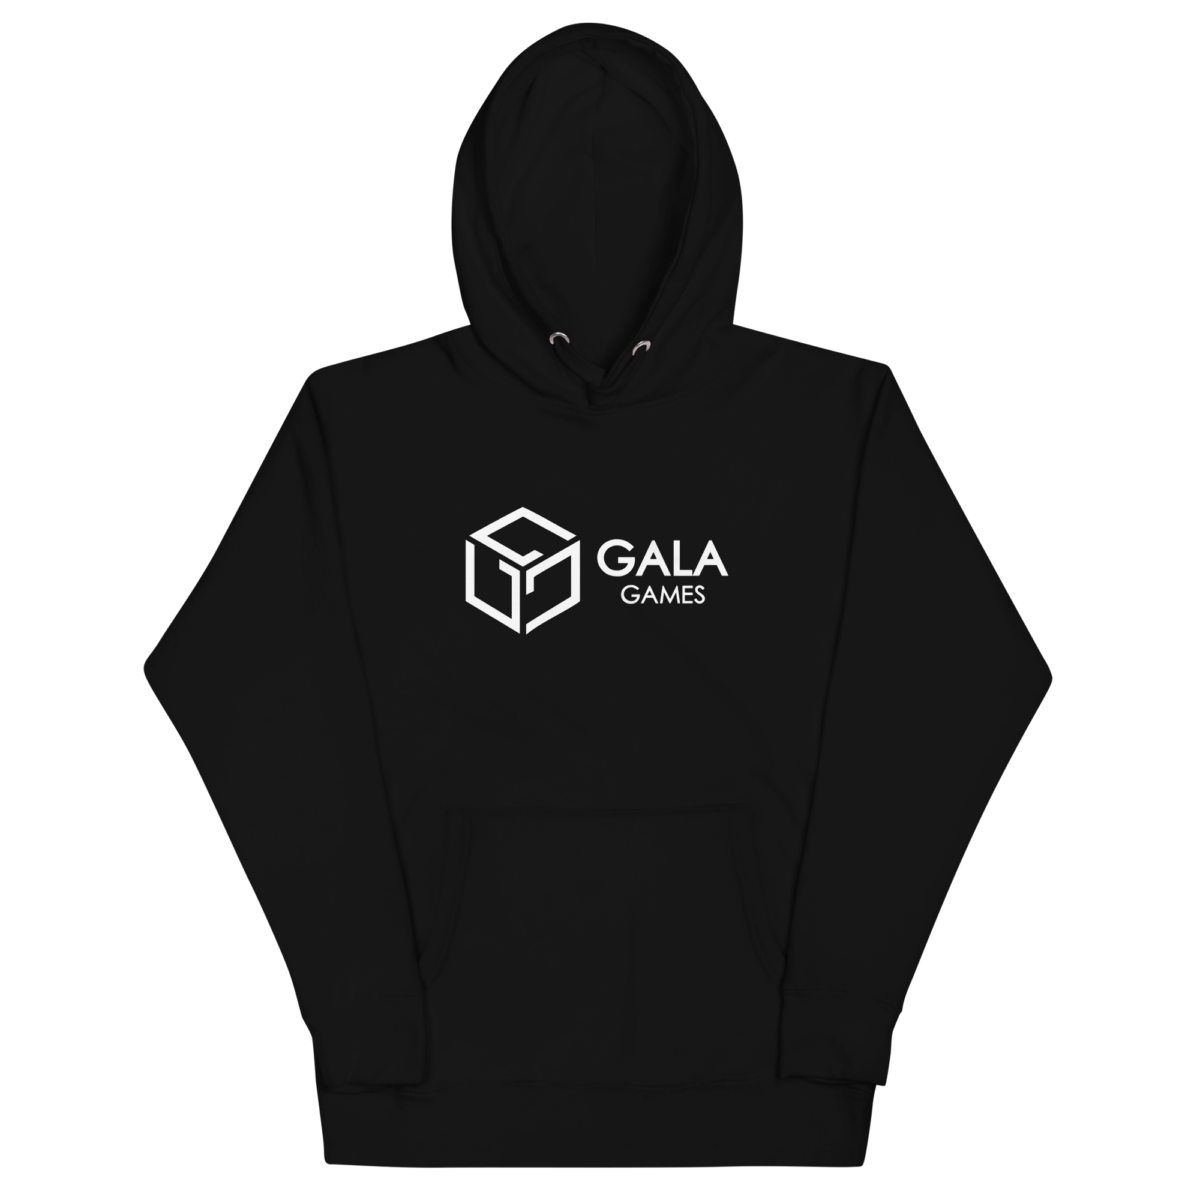 unisex premium hoodie black front 63698dd5e89a1 - Gala Games Hoodie